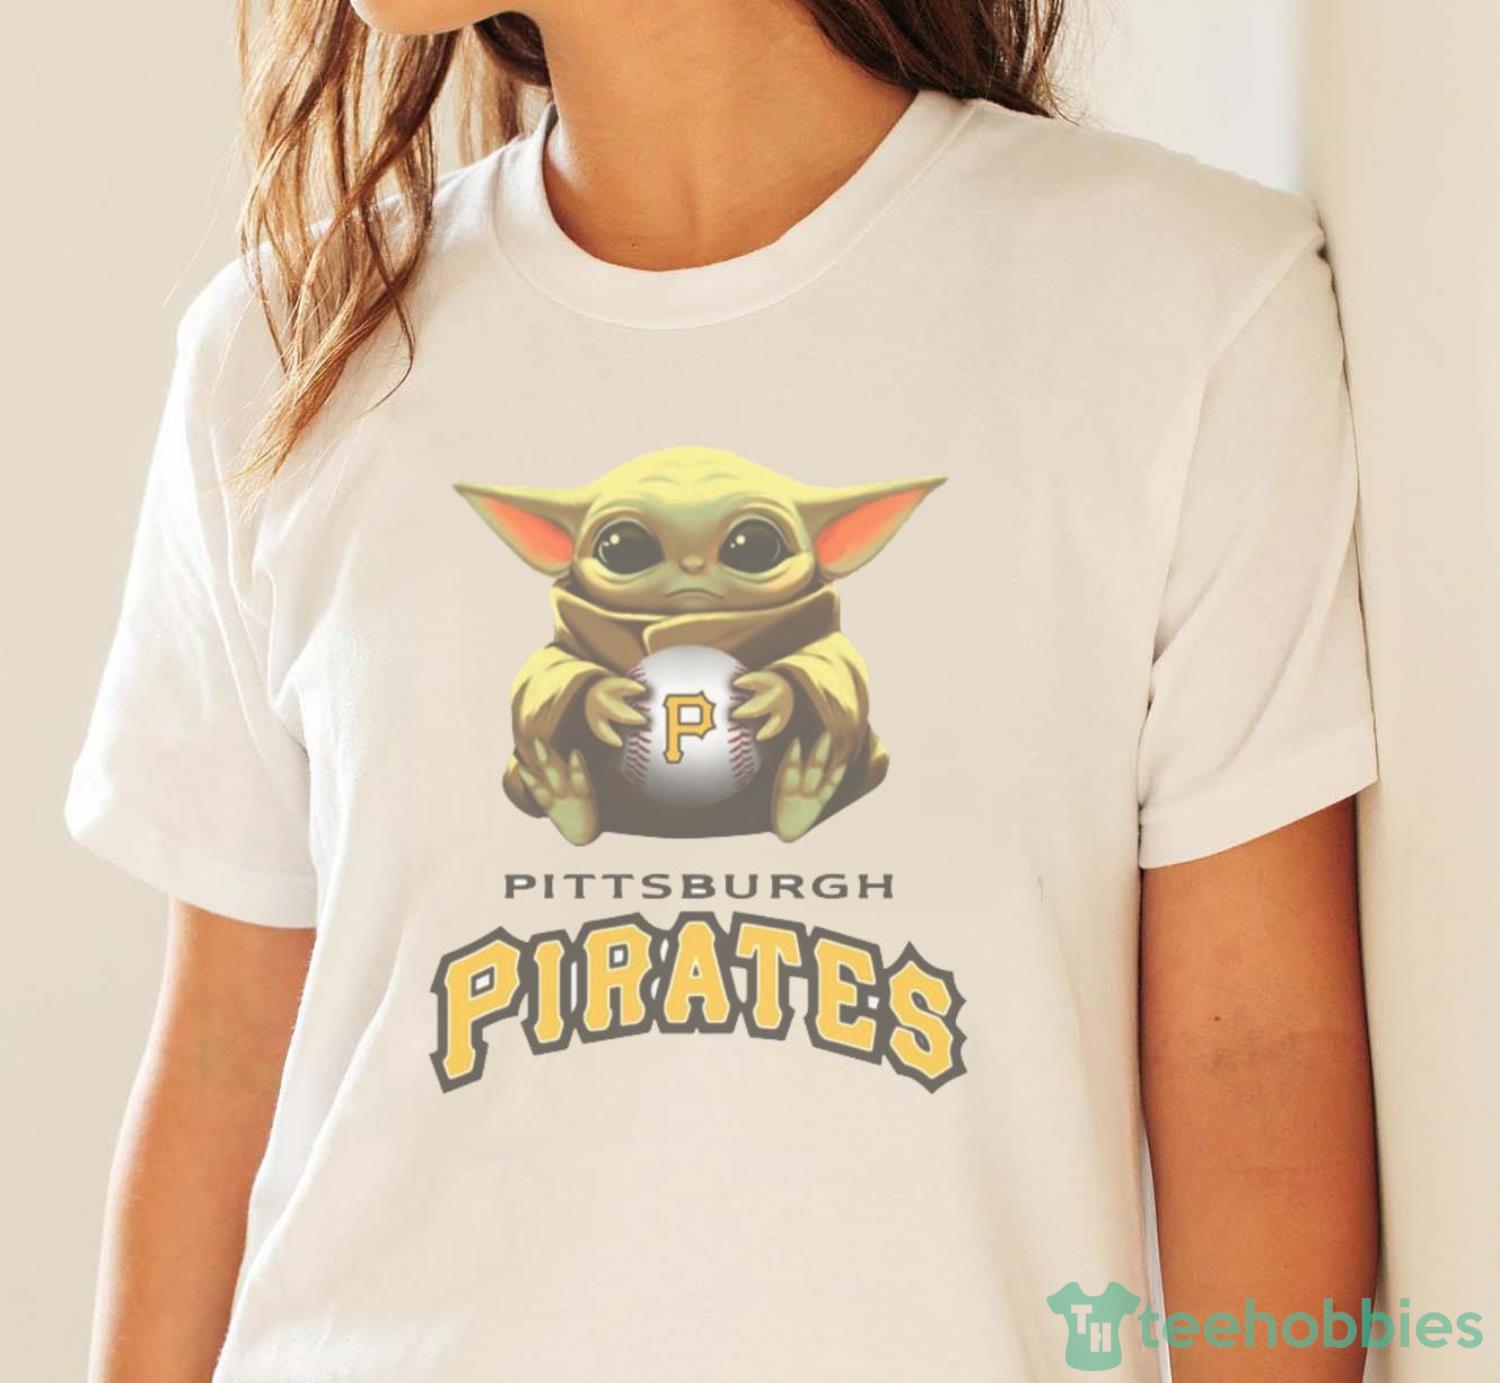 MLB Baseball Pittsburgh Pirates Star Wars Baby Yoda Shirt T Shirt - White Ladies T-Shirt